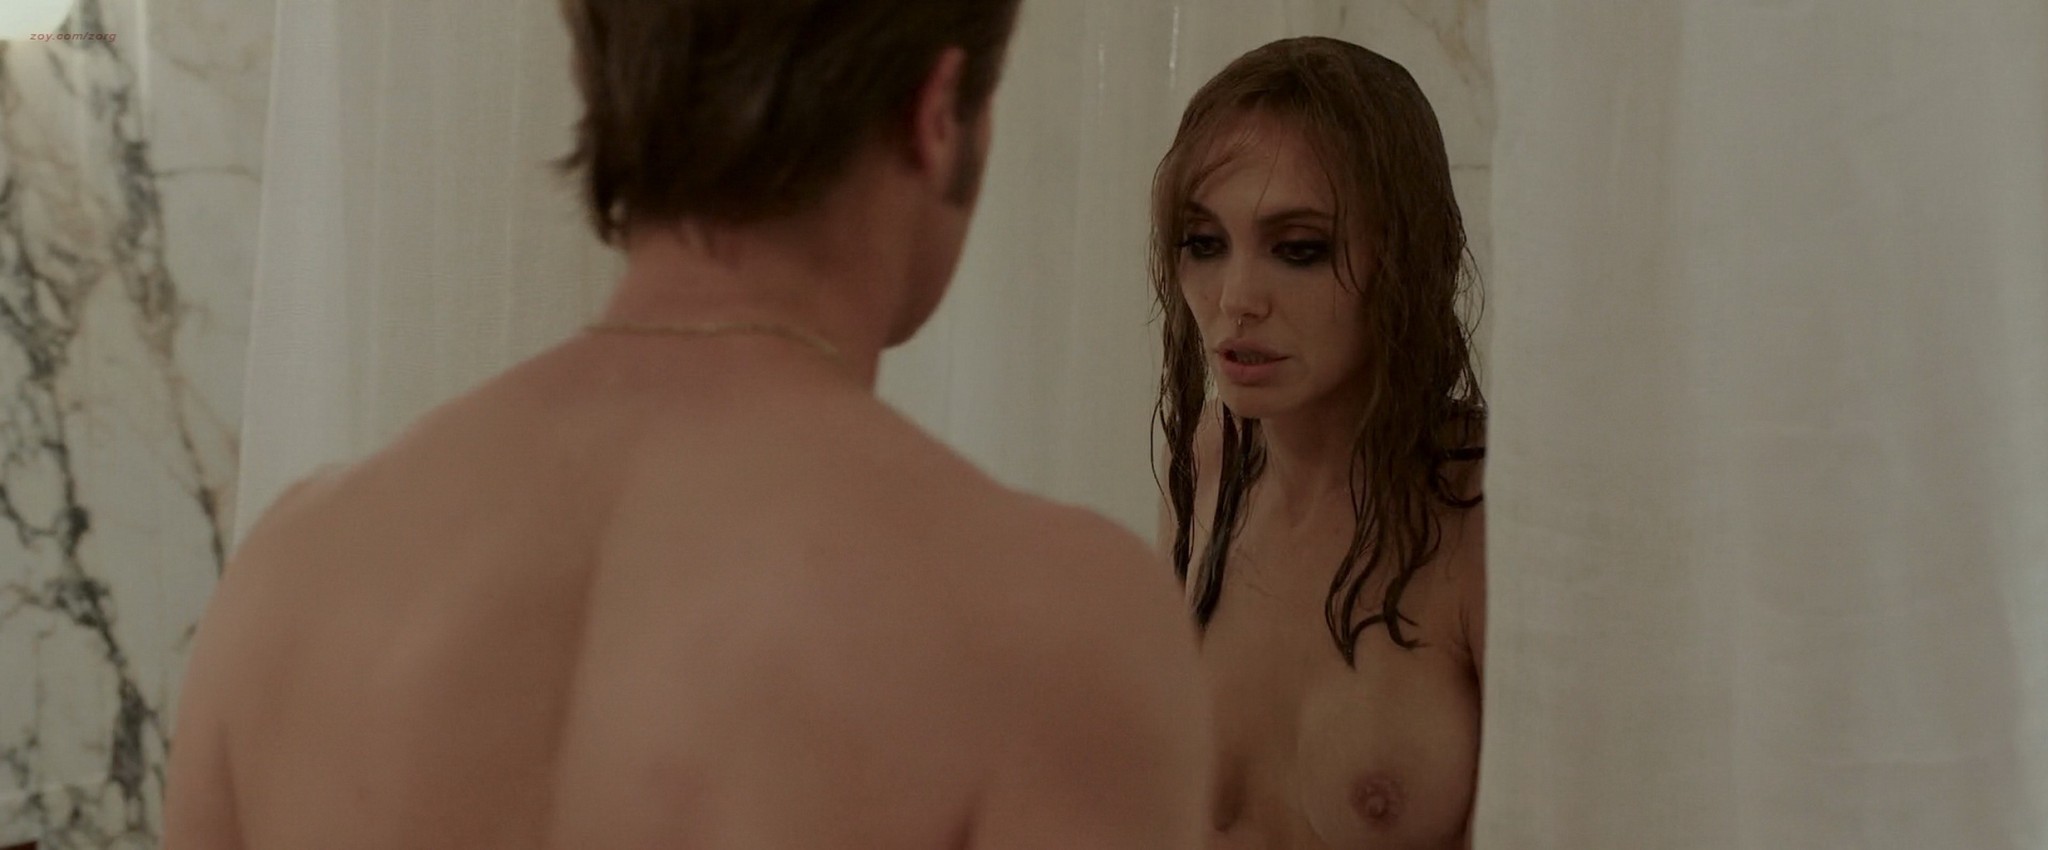 Angelina Jolie topless in the bath having sex #75146924